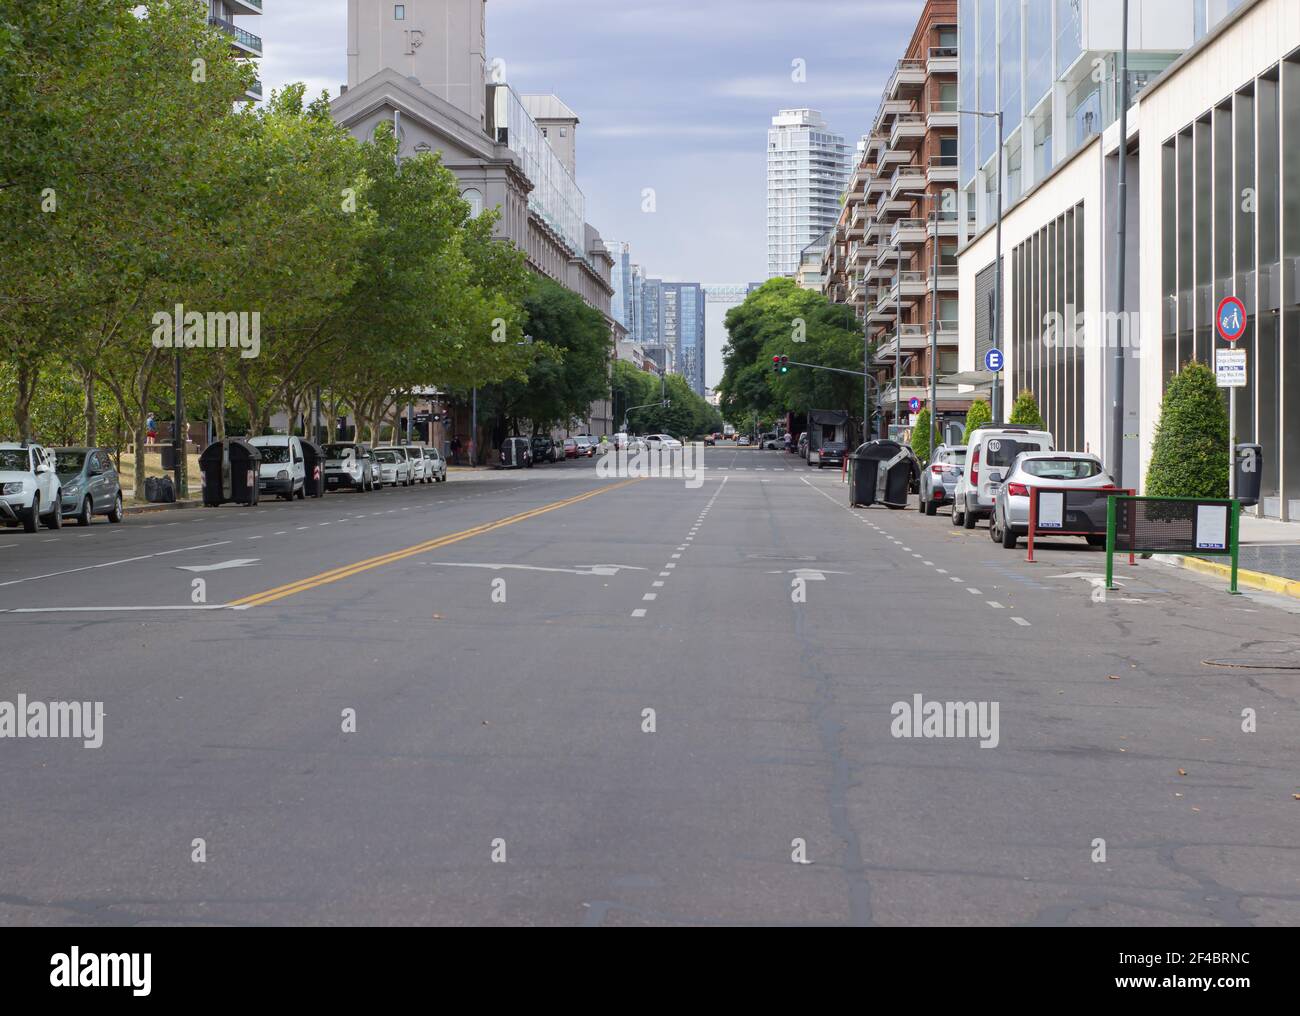 Street without people during coronavirus. Stock Photo